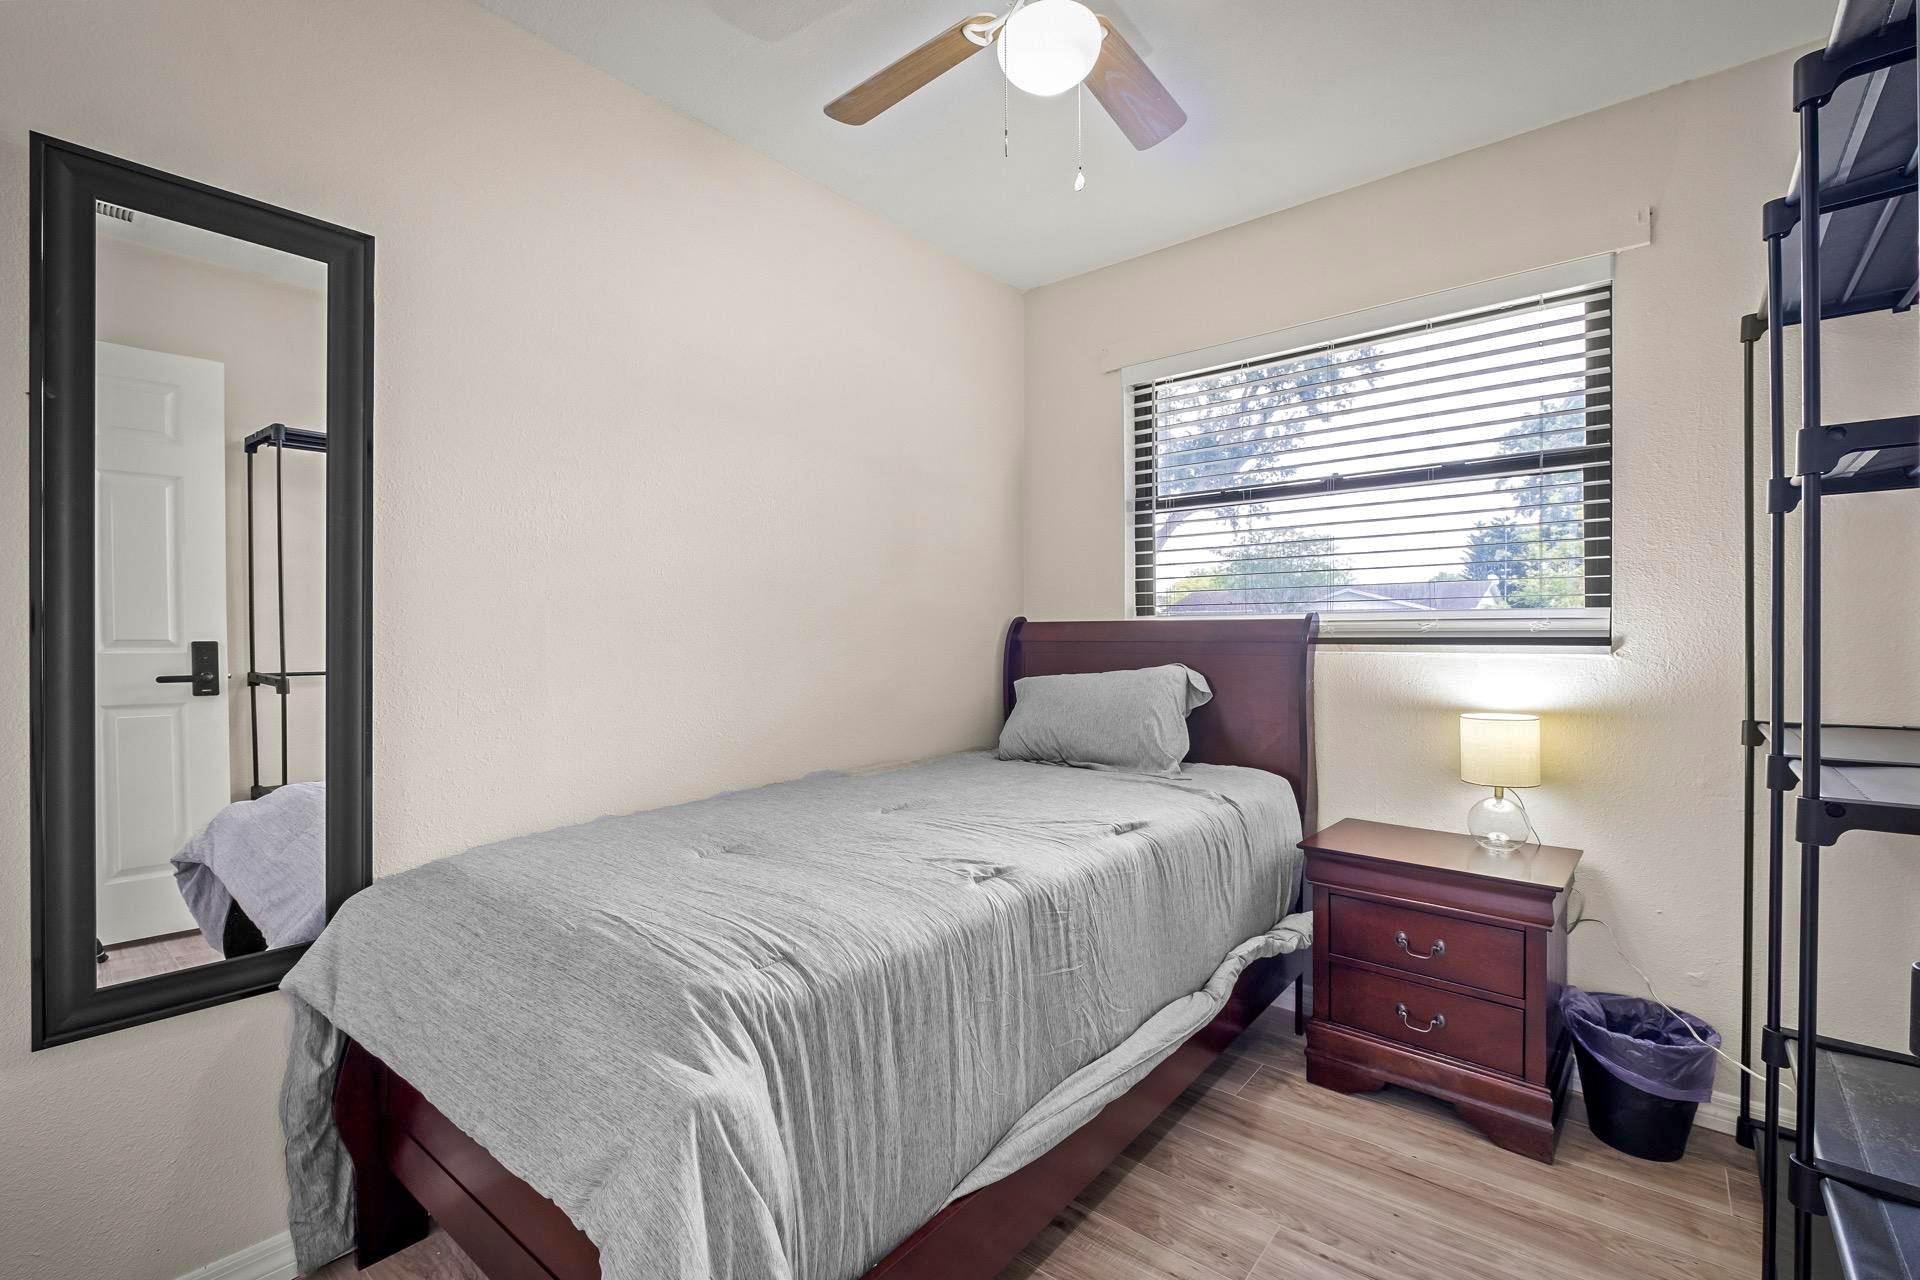 bedroom, detected:ceiling fan, window blind, bed